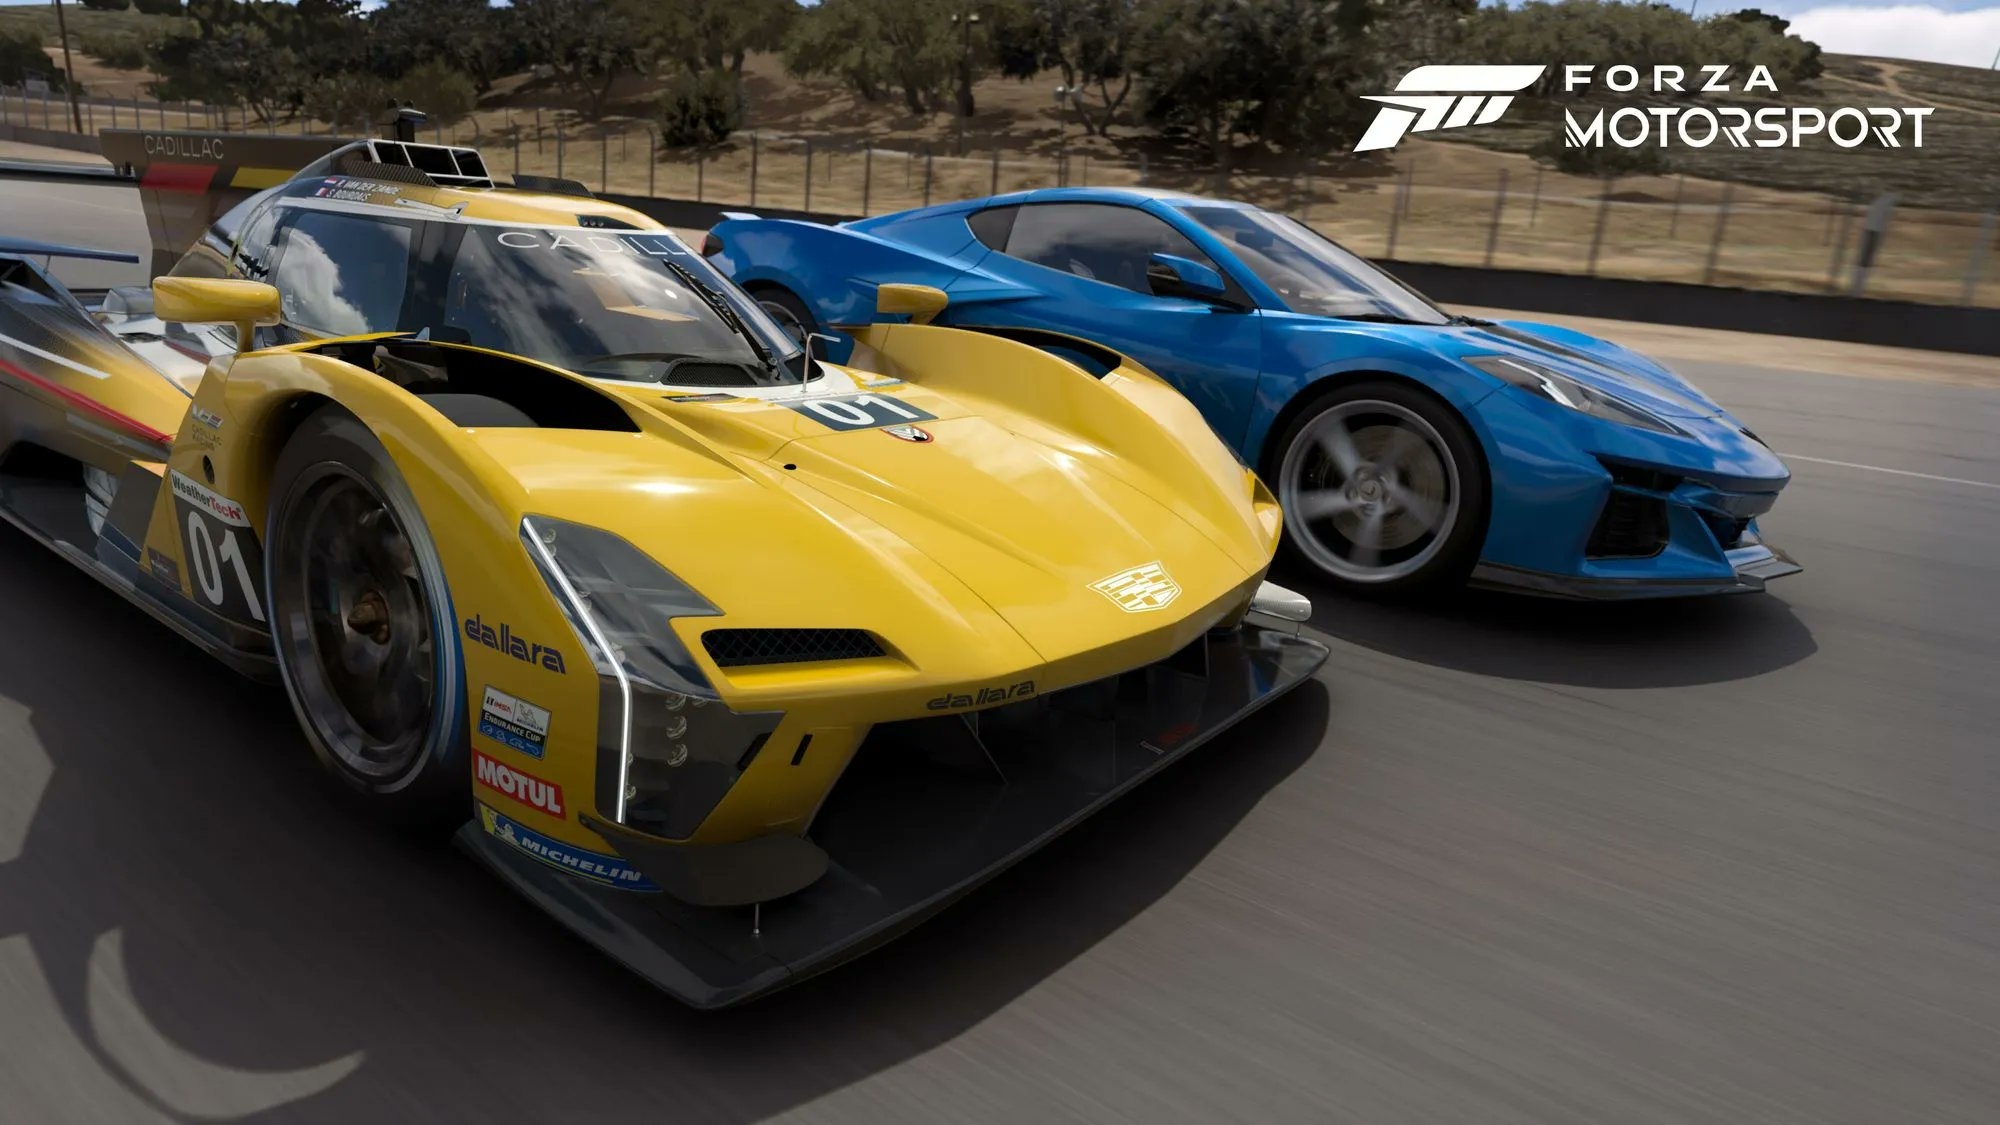 Forza Motorsport's first major content update has been detailed